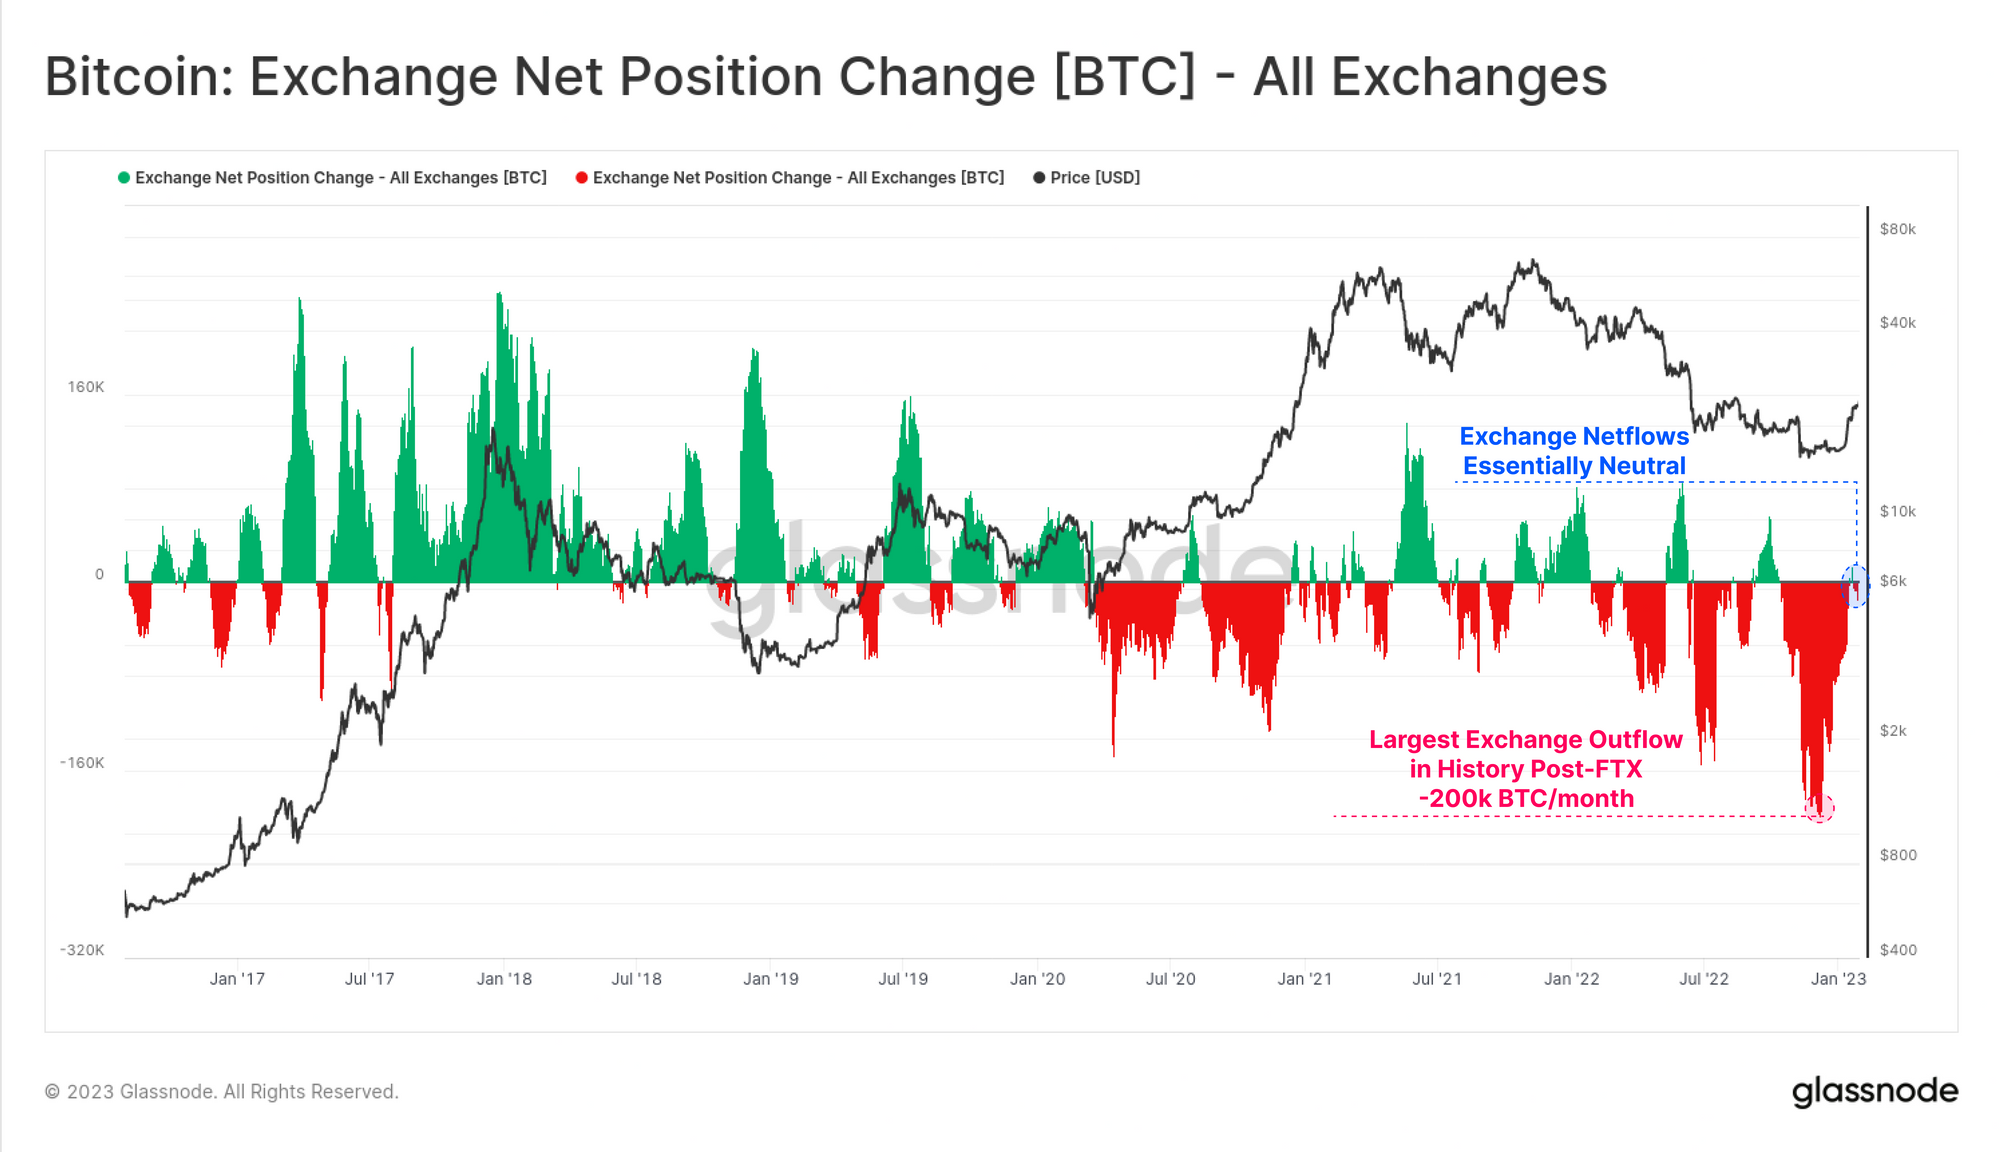 Bitcoin Exchange Netflows At Neutral Values As Market Reaches Balance